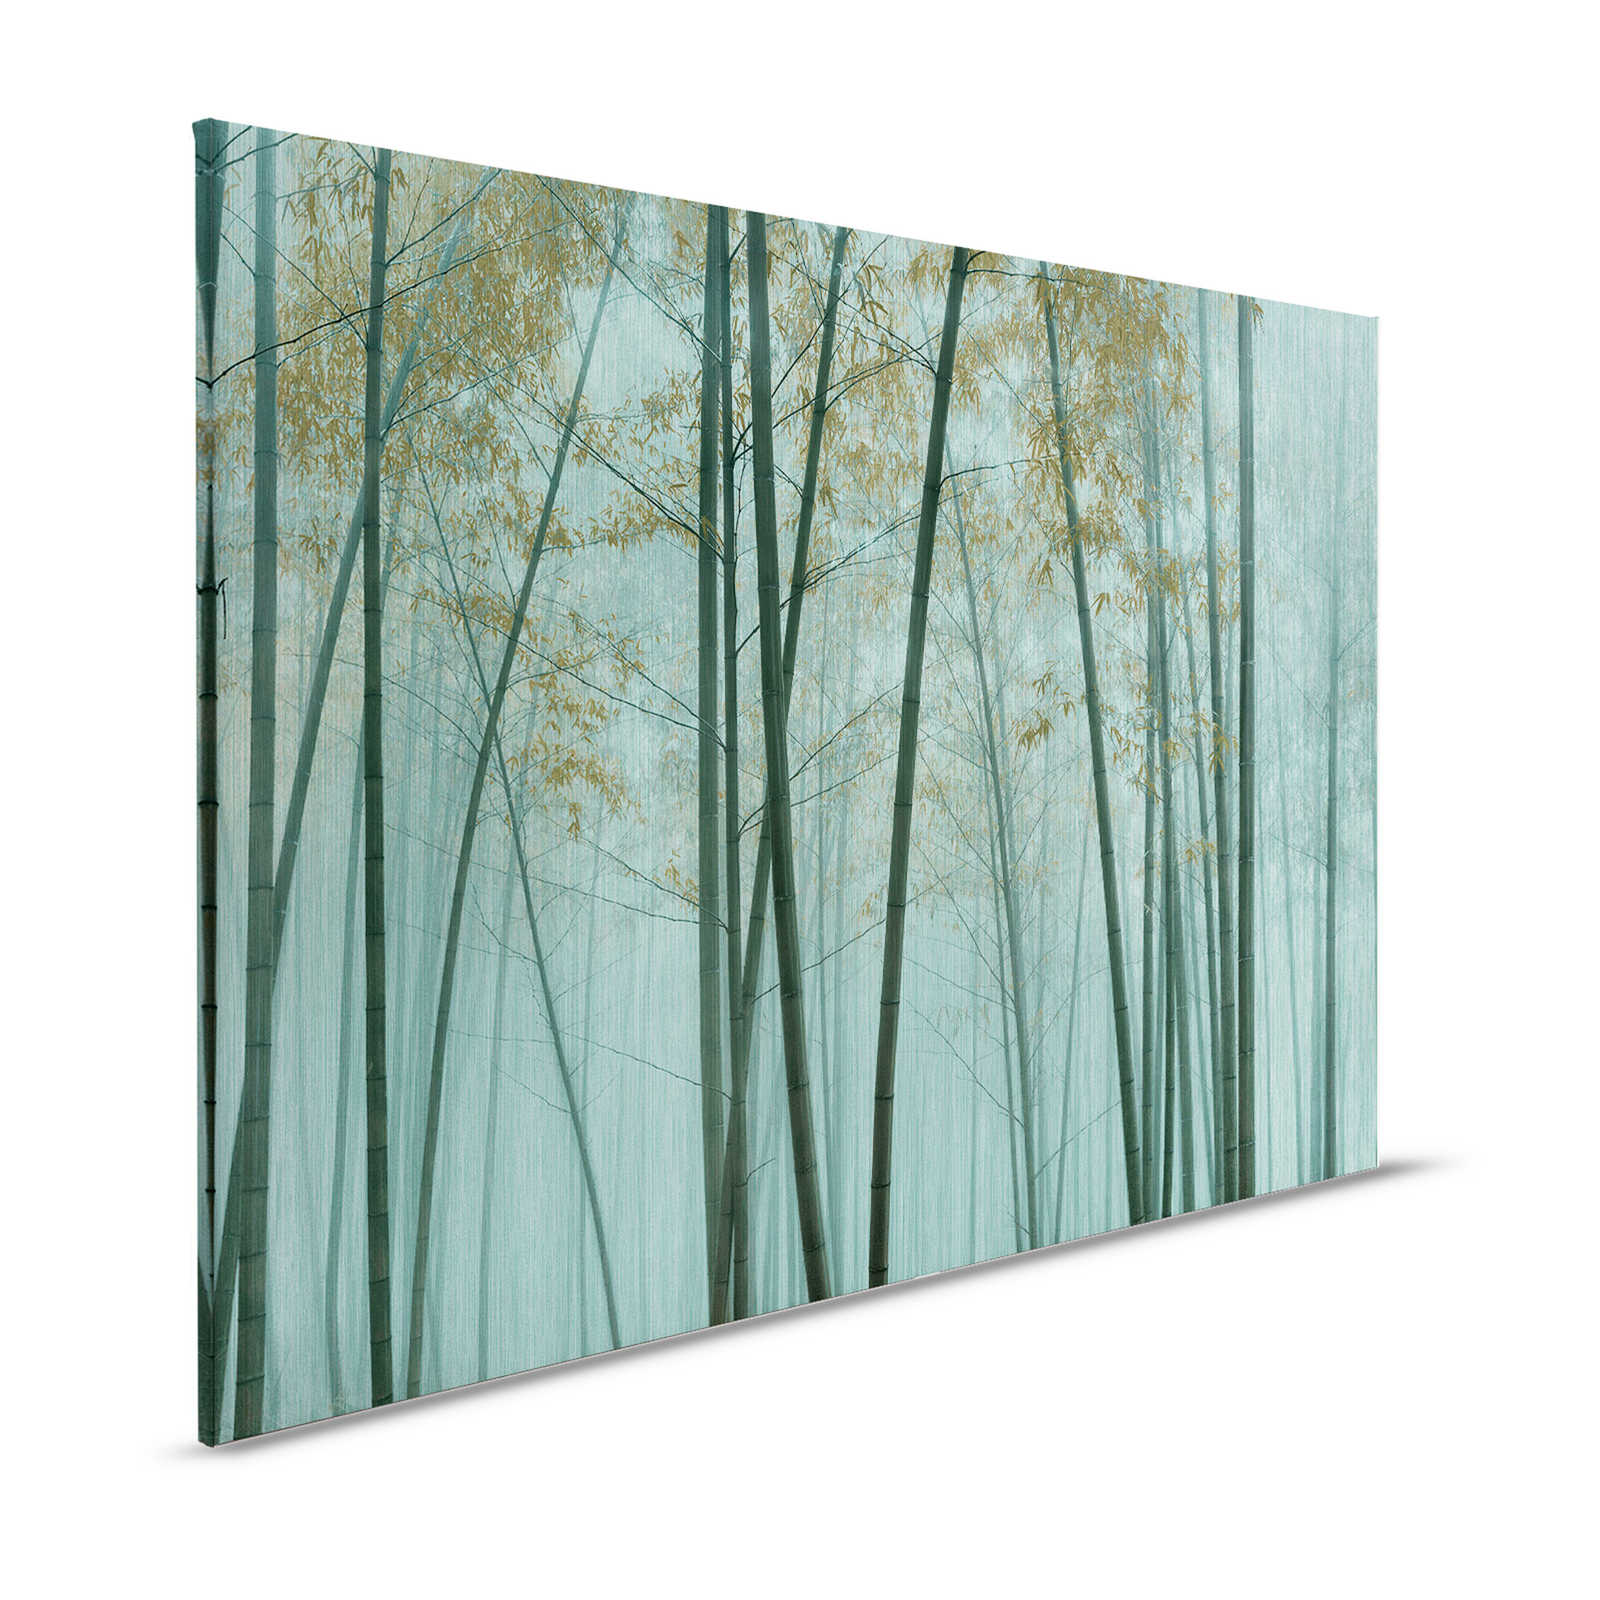 En el bambú 3 - Asia Cuadro en lienzo Bosque de bambú - 1,20 m x 0,80 m
